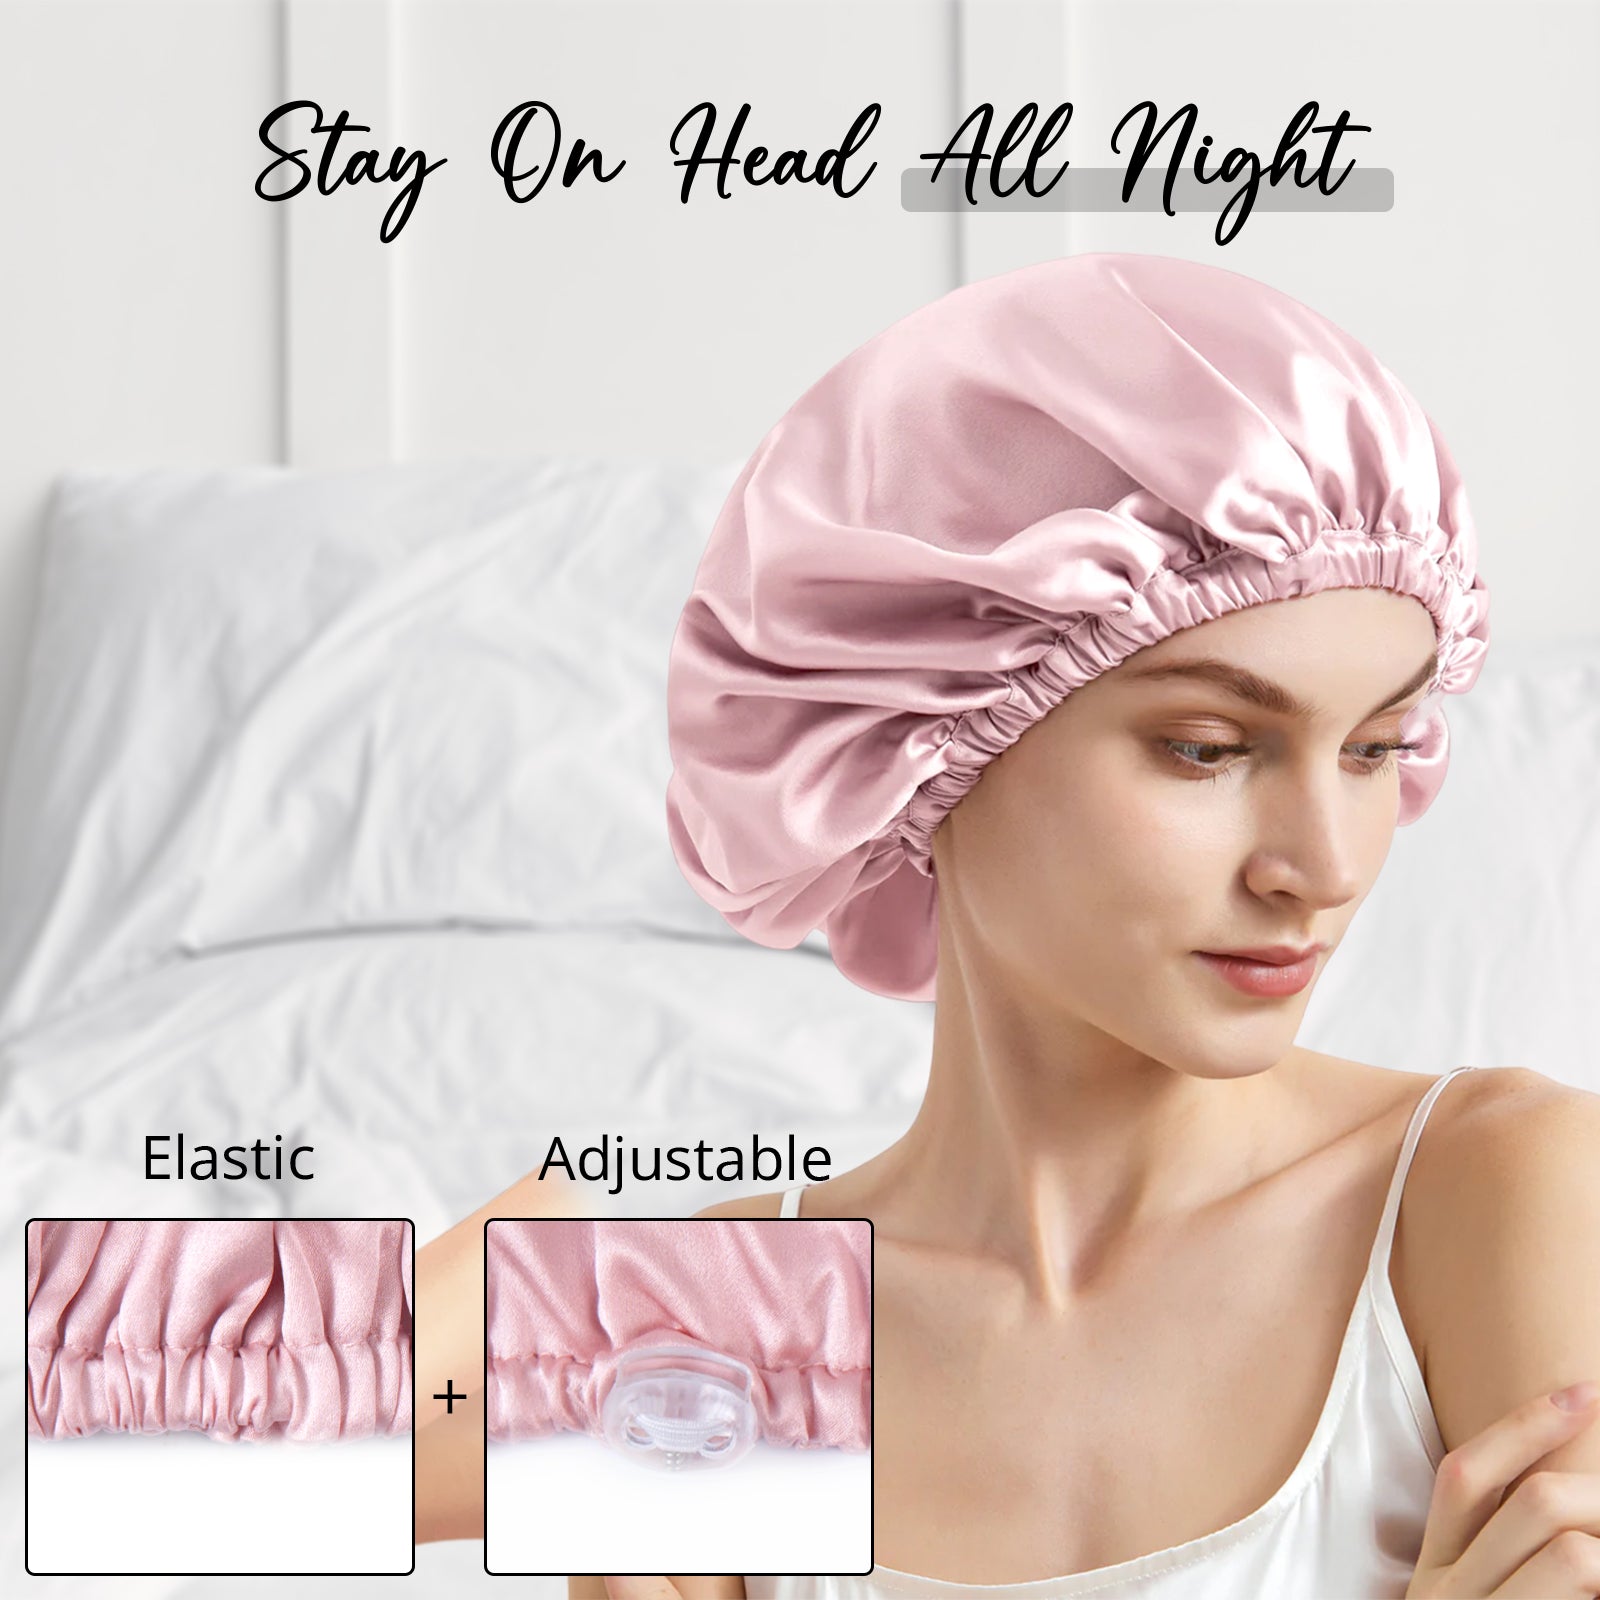 WIGI Premium Mulberry Silk Sleeping Bonnet - Round Style & Rose Pink